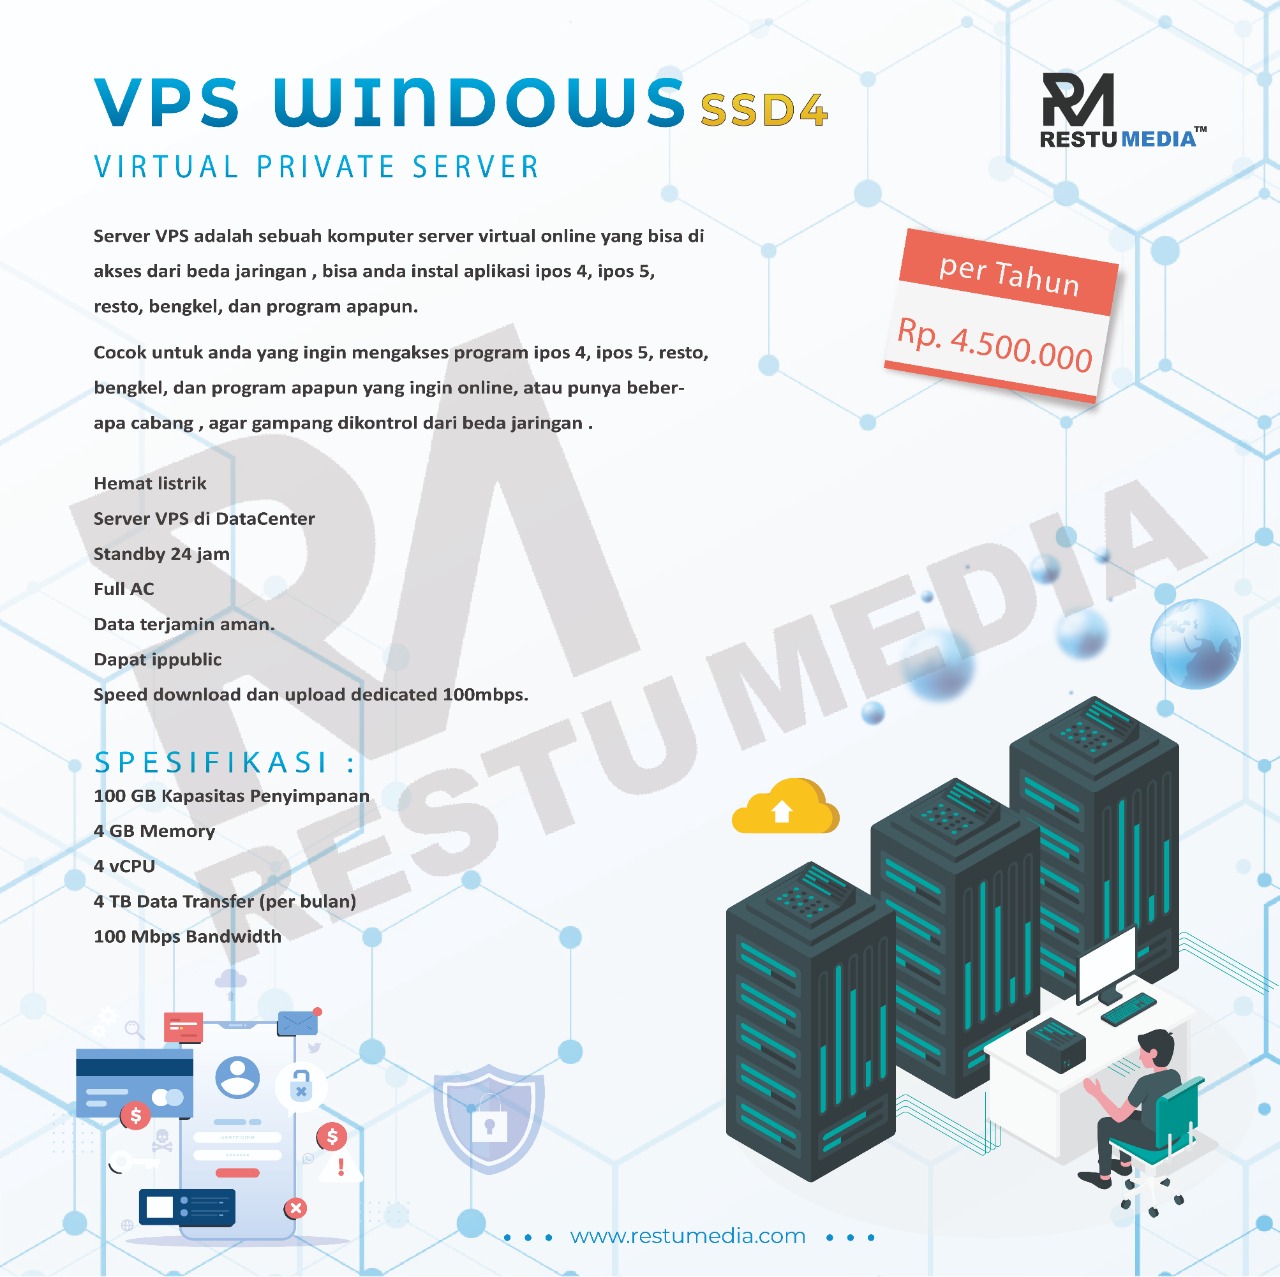 VPS Windows SSD 4